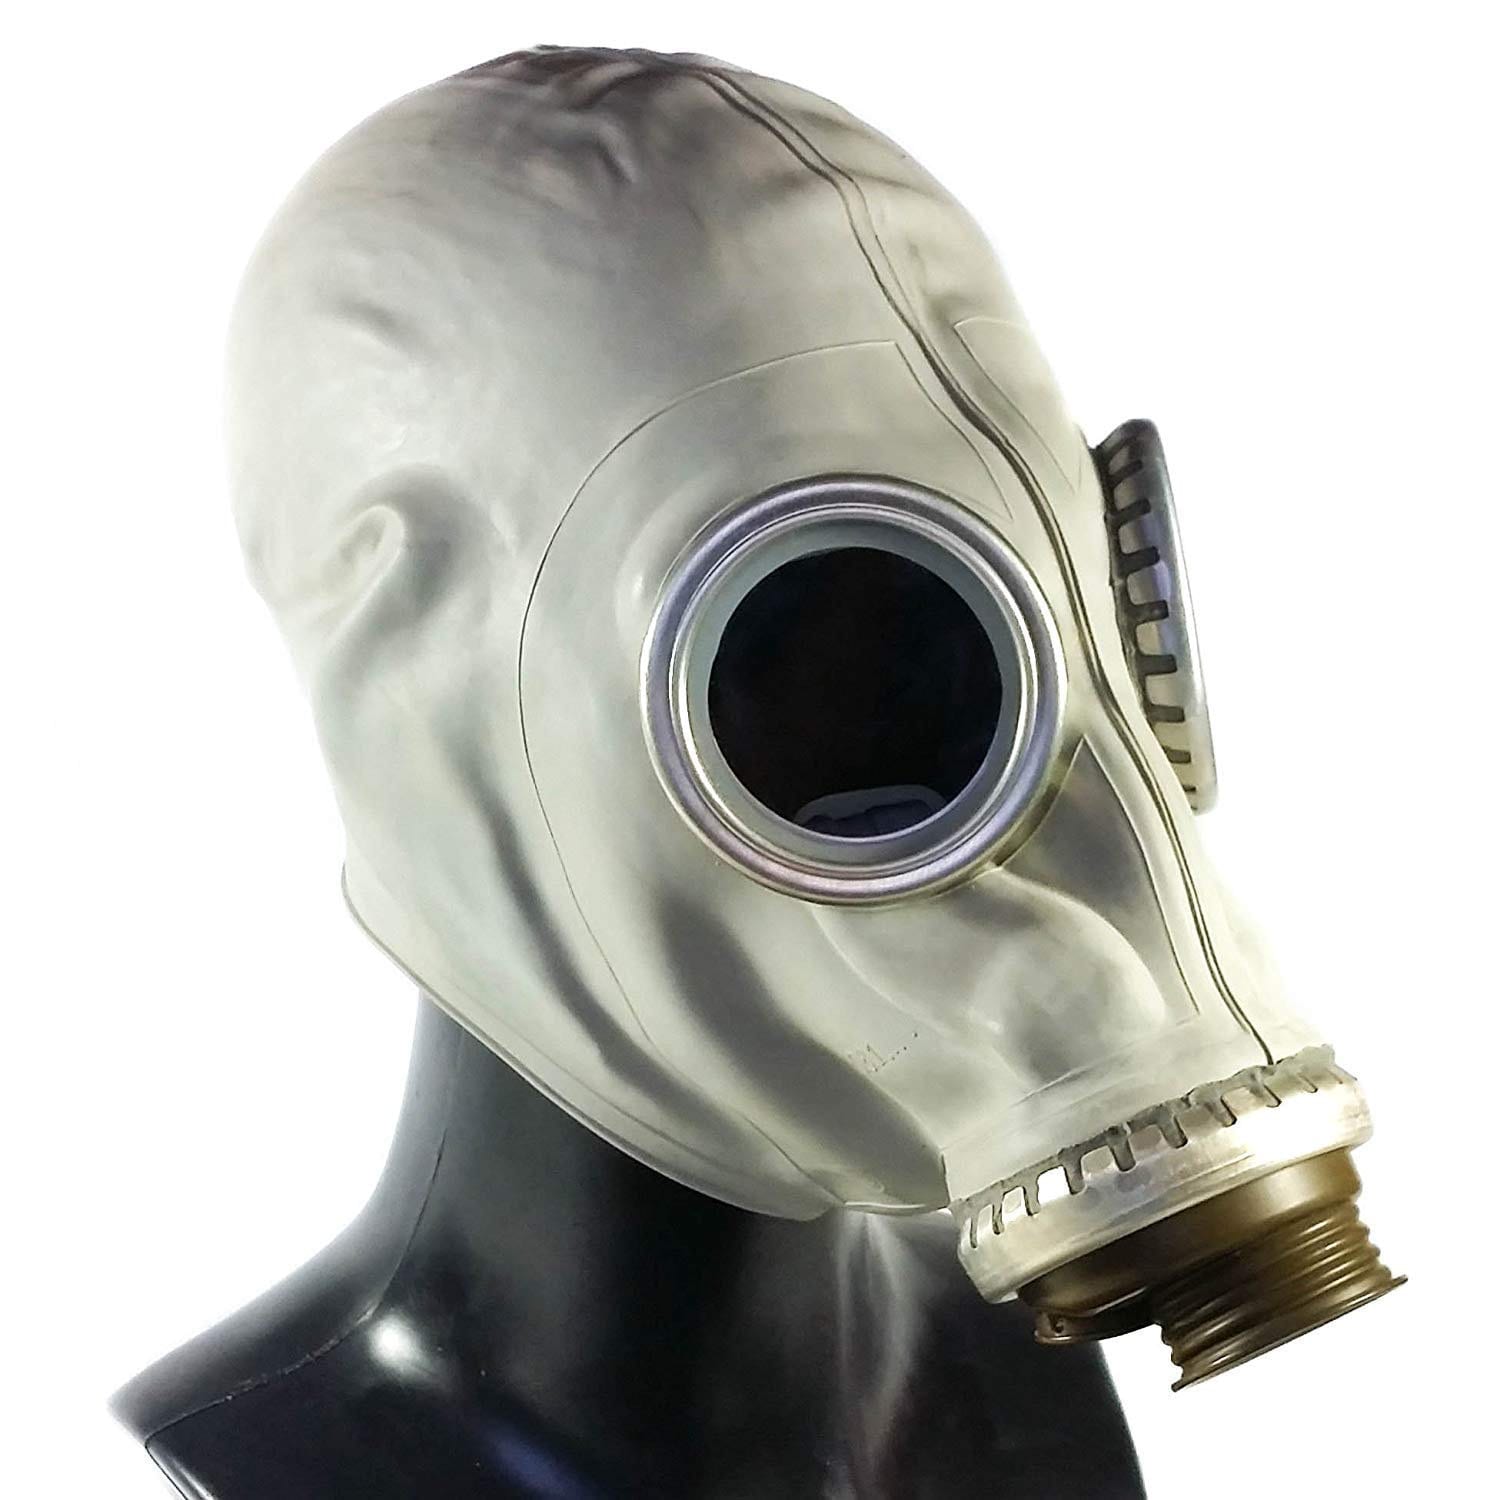 gp5 gas mask